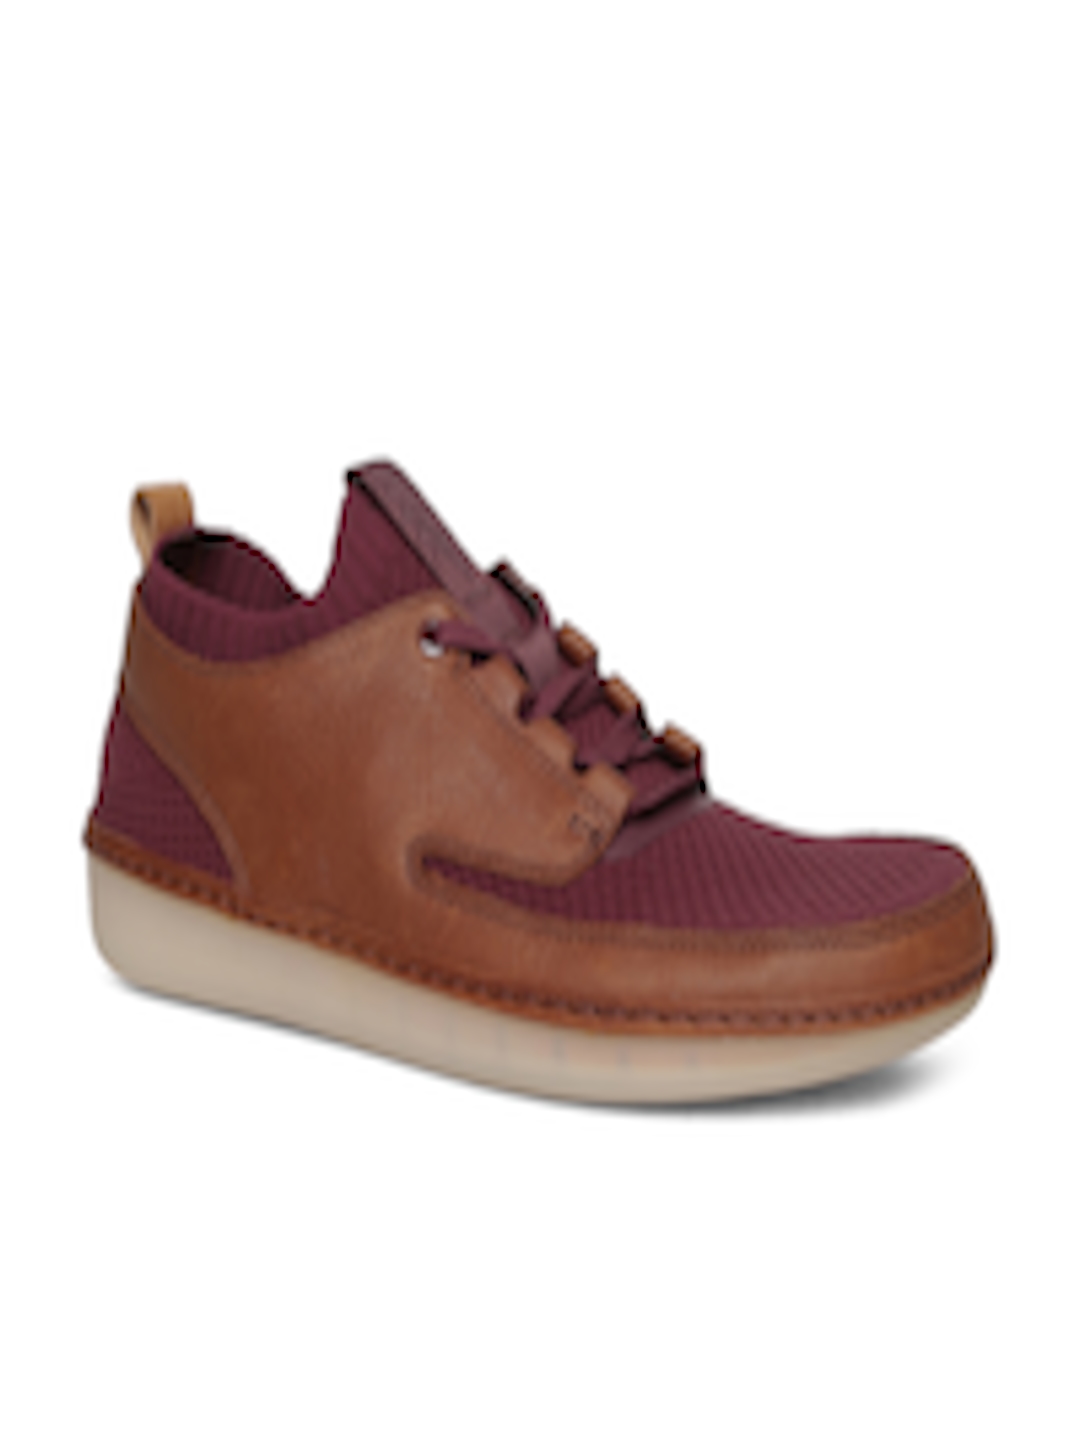 Buy Clarks Men Brown Sneakers - Casual Shoes for Men 6765750 | Myntra